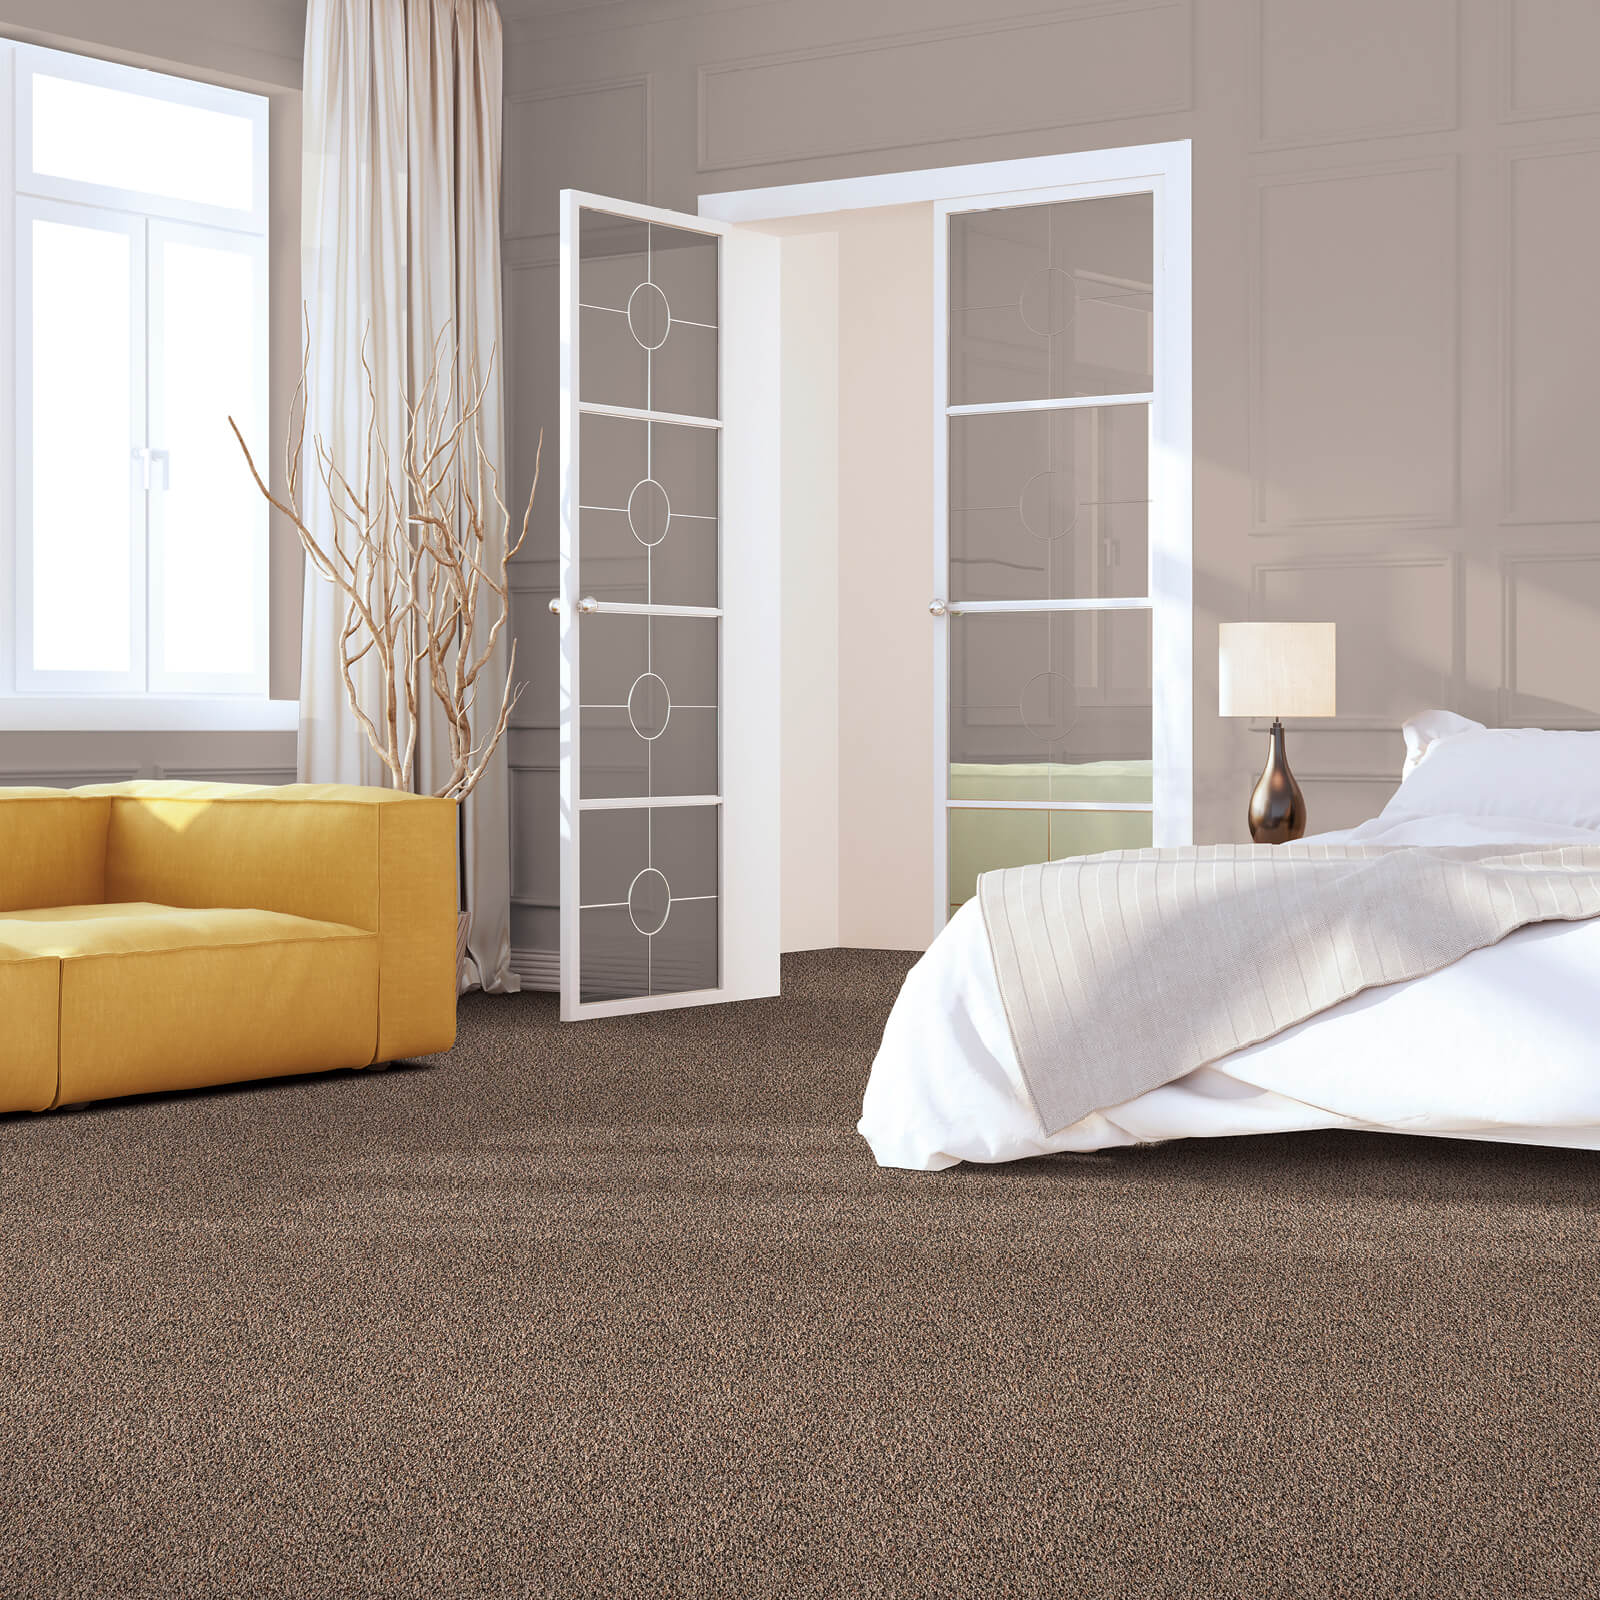 Bedroom Carpet | J/K Carpet Center, Inc